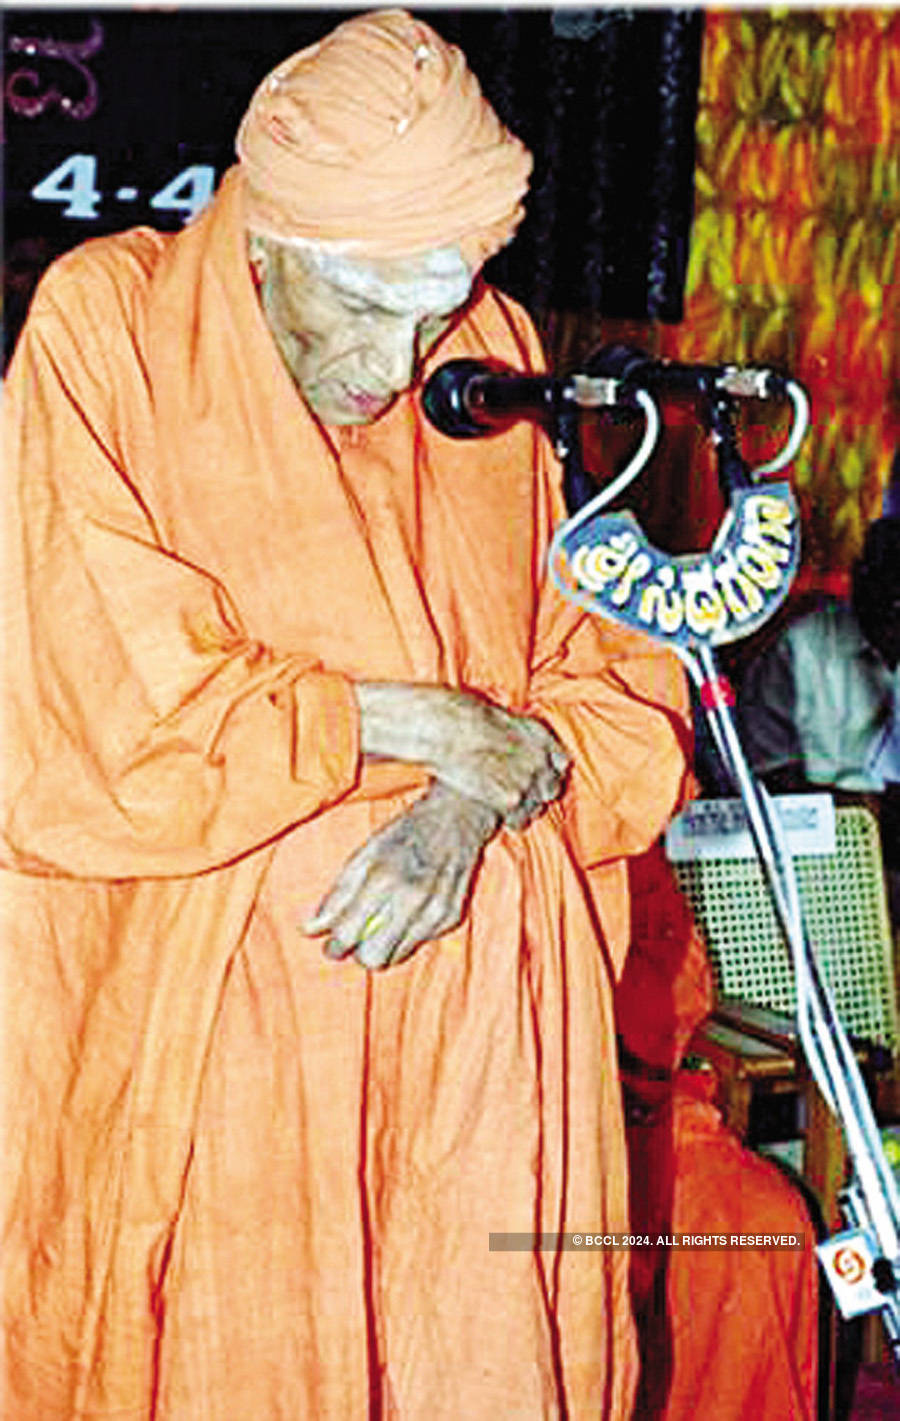 'The Walking God' Shivakumara Swamiji dies at 111